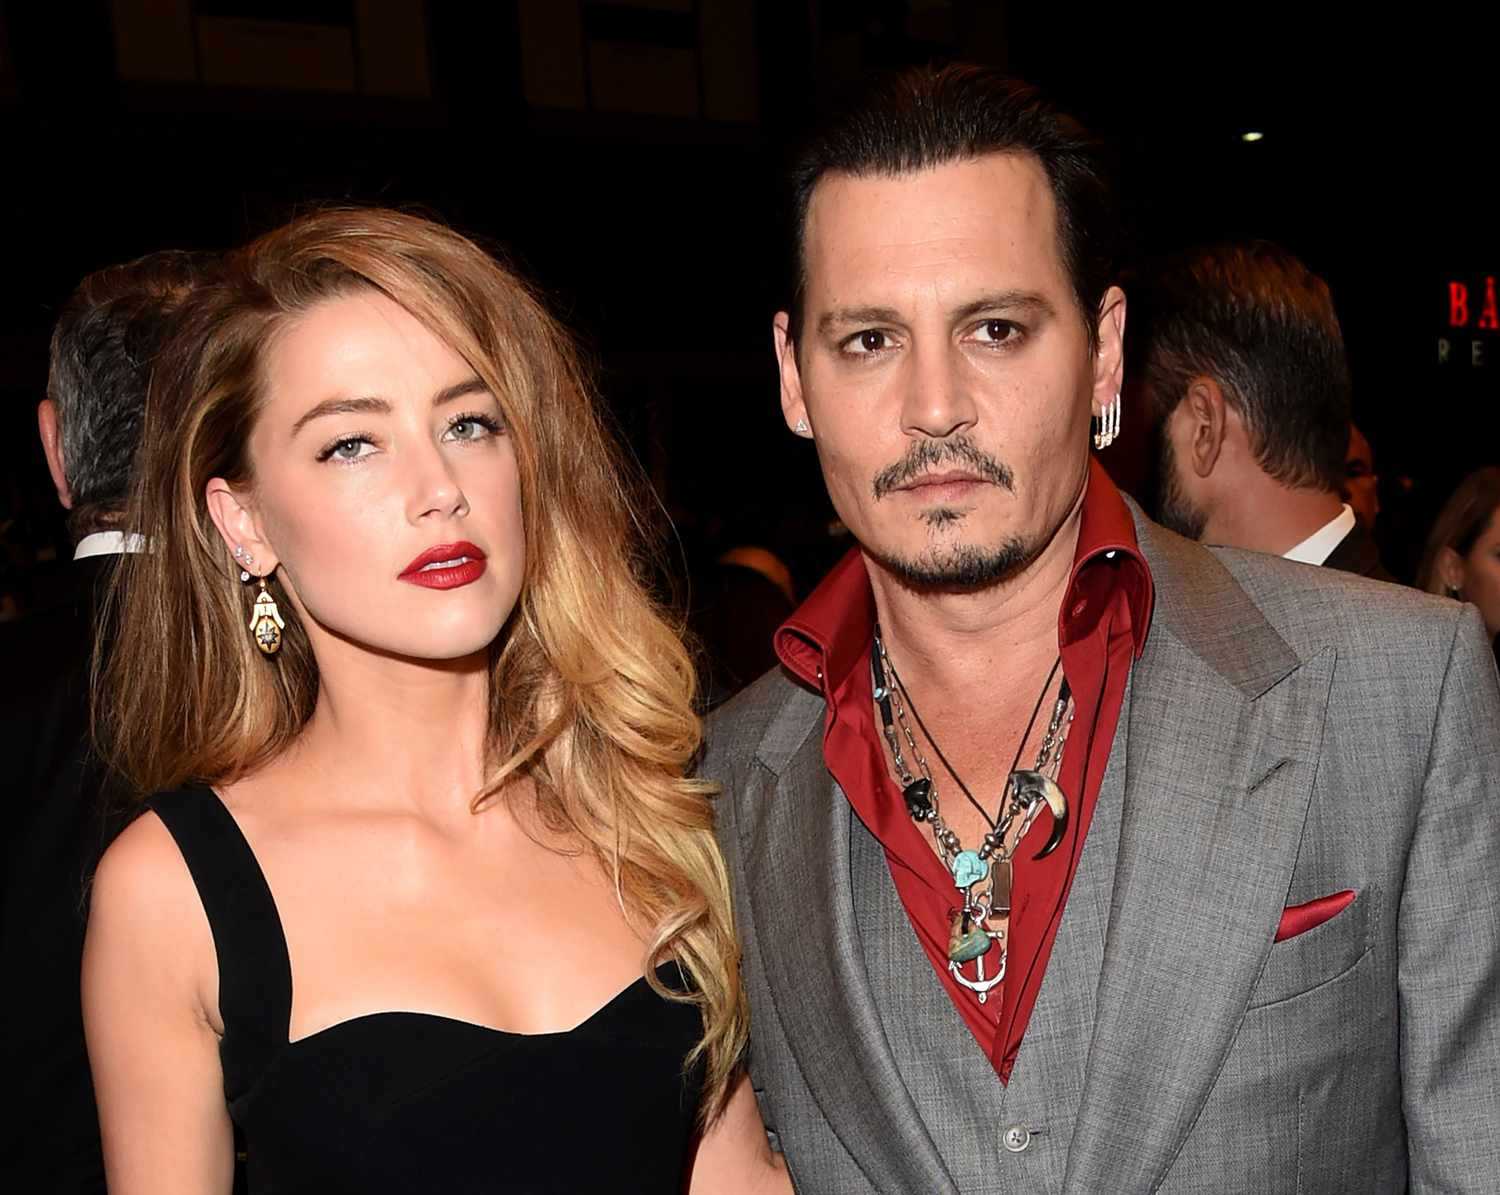 Amber Heard's defamation drama: Depp's victory shakes Hollywood - a retrospective